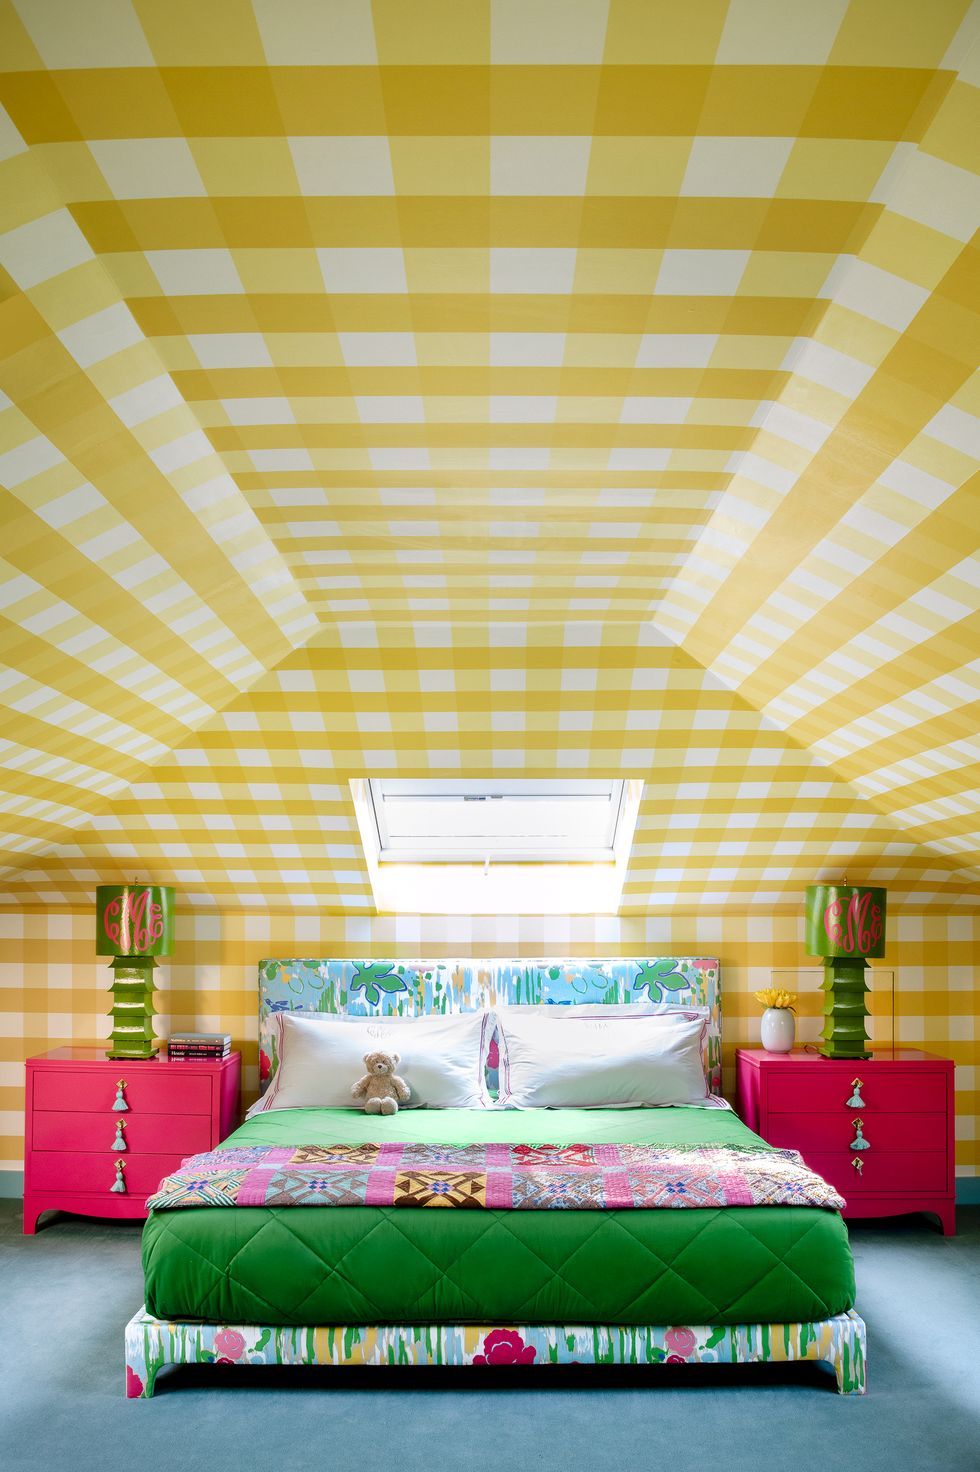 55 Kids Room Design Ideas Cool Kids Bedroom Decor And Style,Interior Design Principles Of Design Harmony